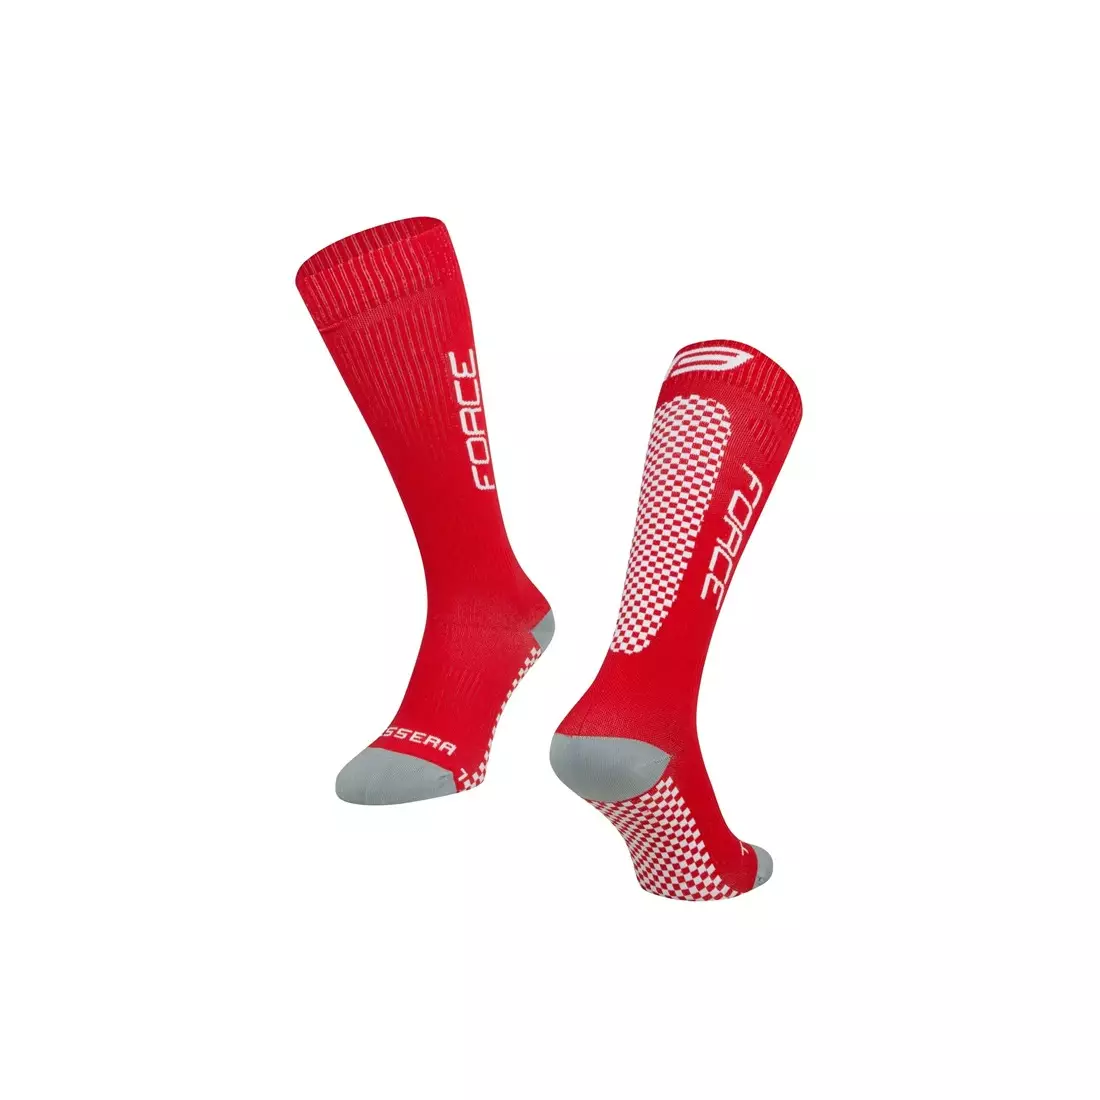 FORCE TESSERA COMPRESSION kompressziós zokni, piros